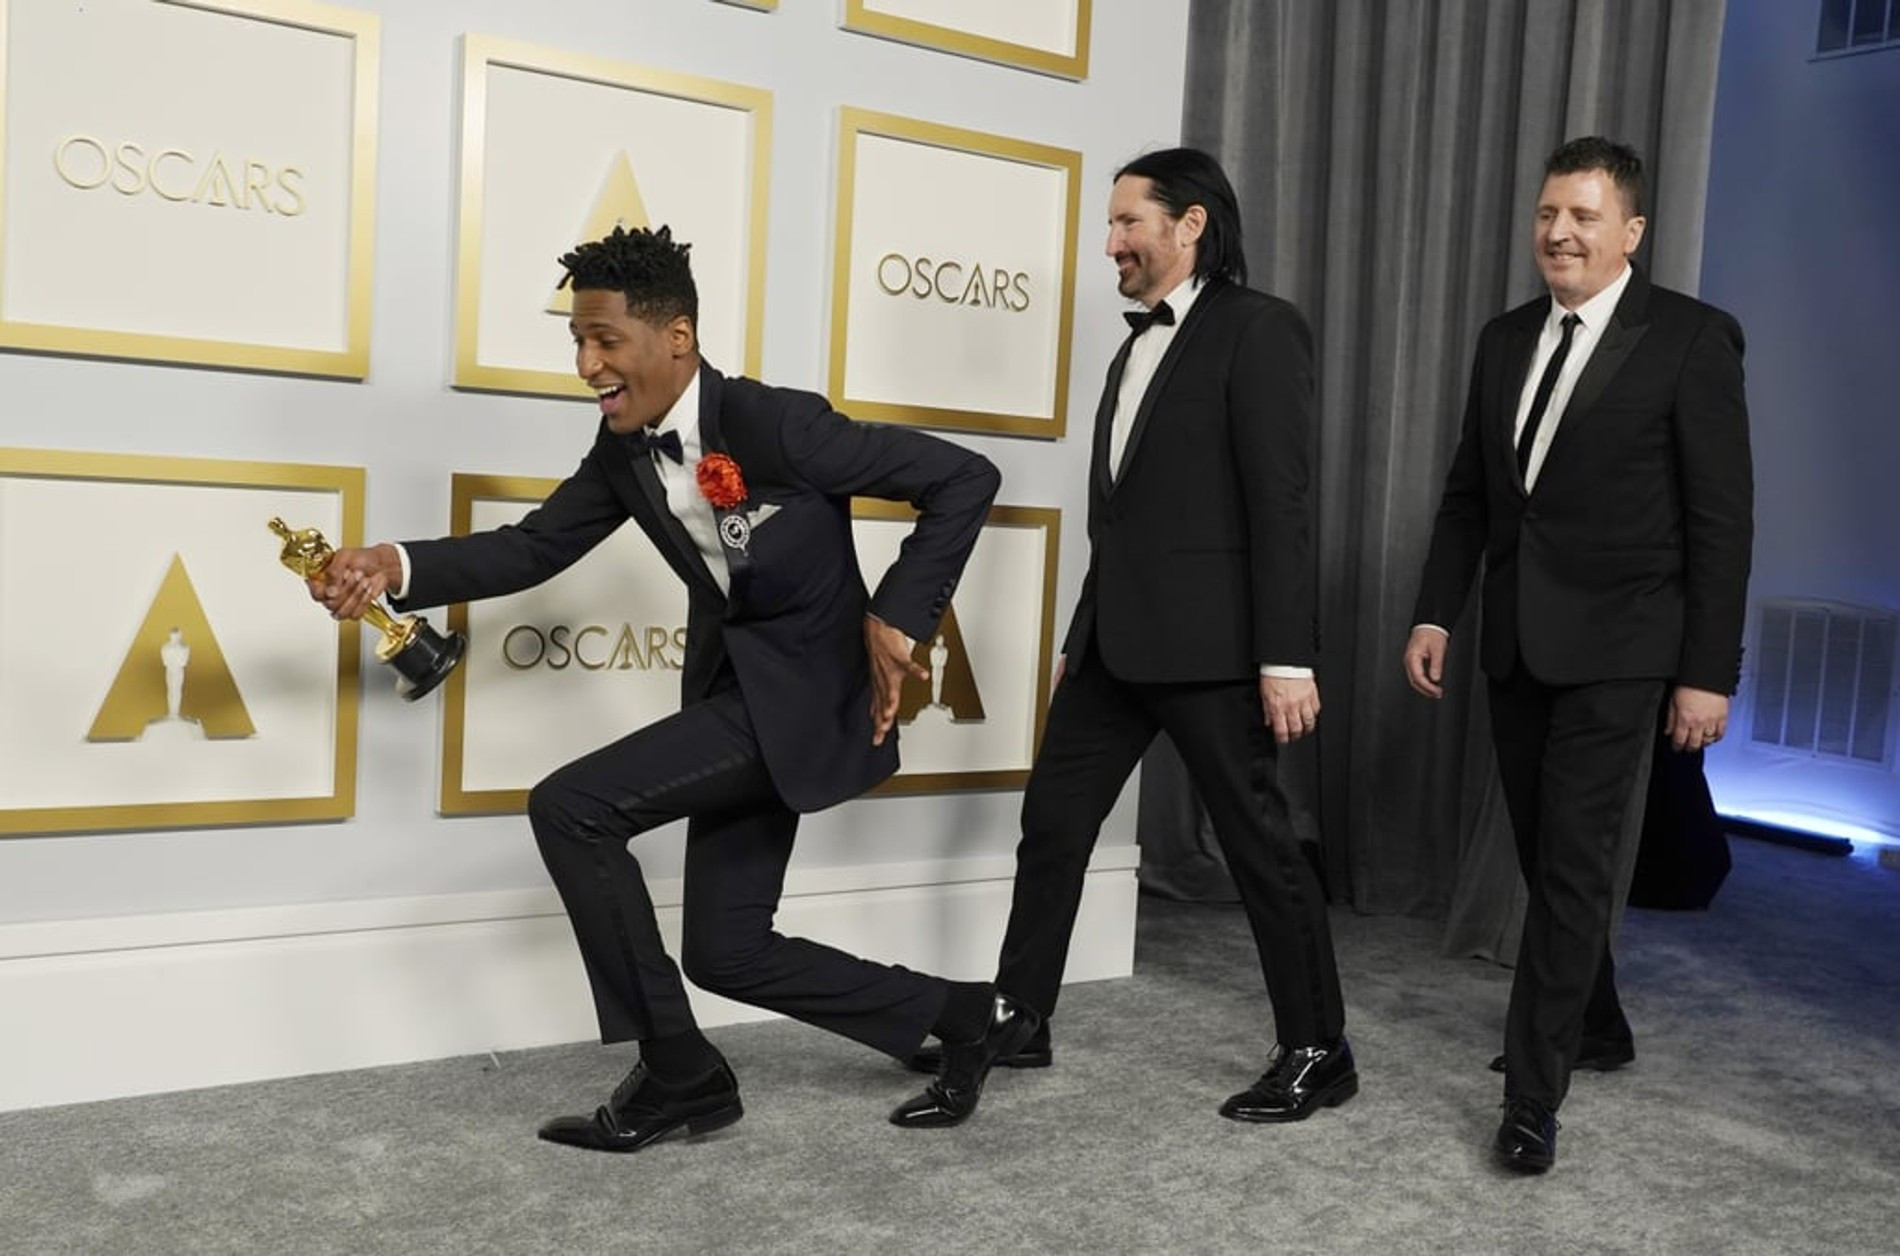 Джон Батист, Трент Резнор и Аттикус Росс на премии «Оскар-2021»
Фото: Getty Images